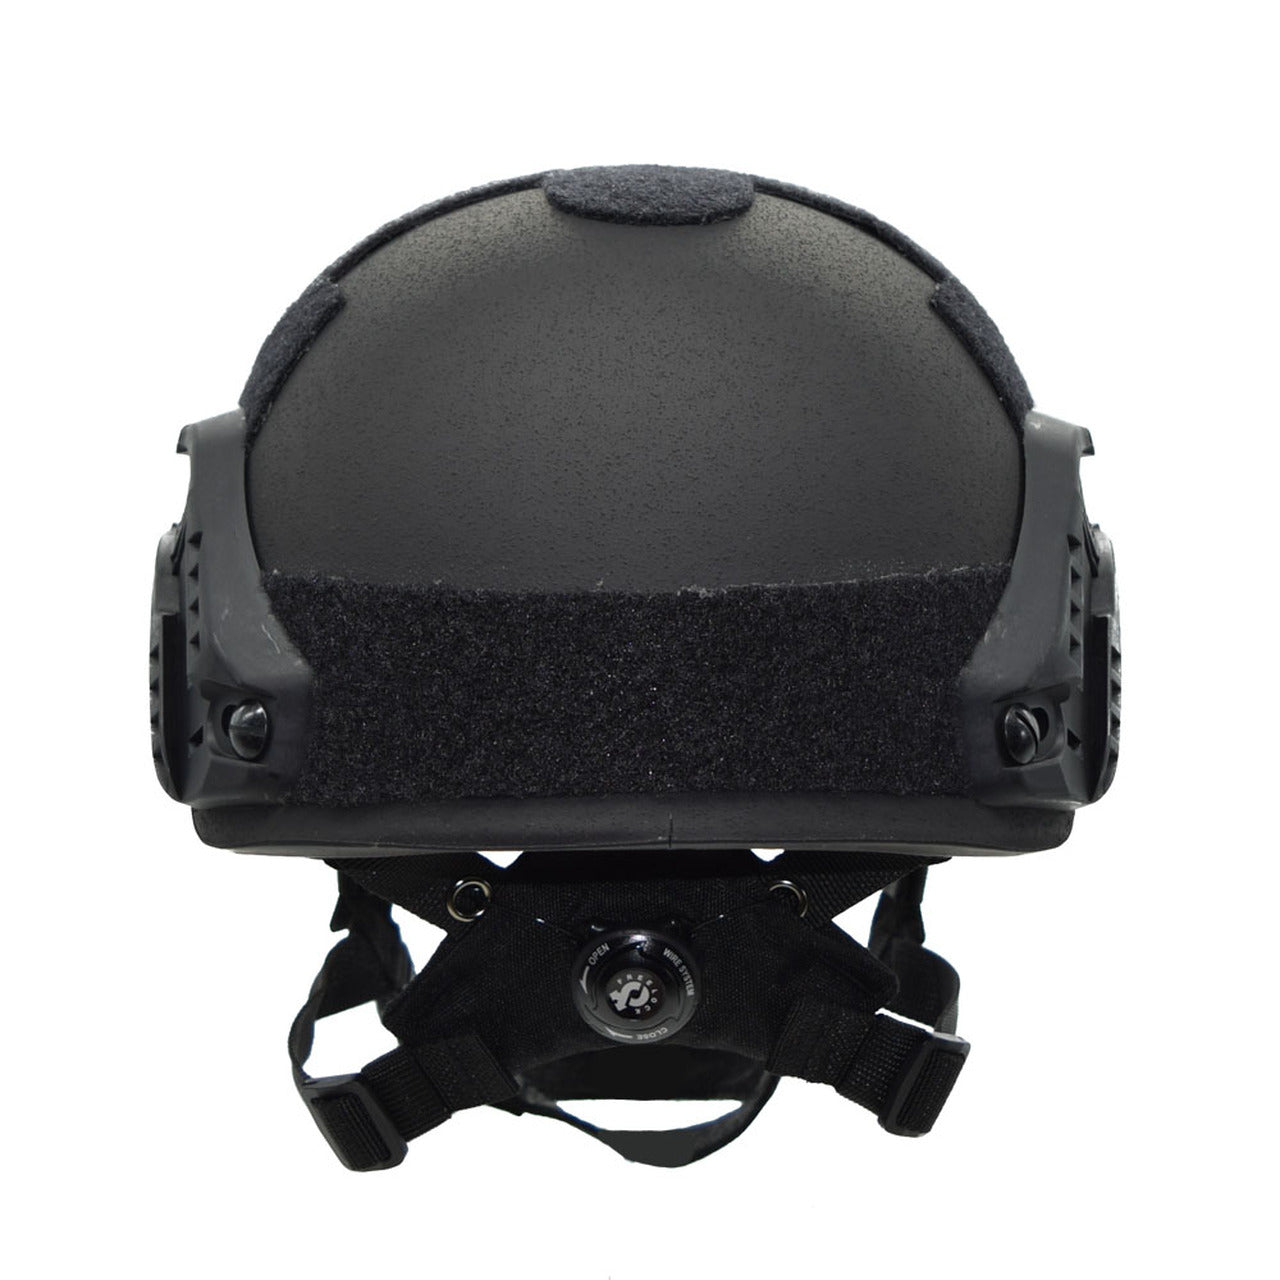 A Shellback Tactical Level IIIA Spec Ops ACH High Cut Ballistic Helmet on a white background.